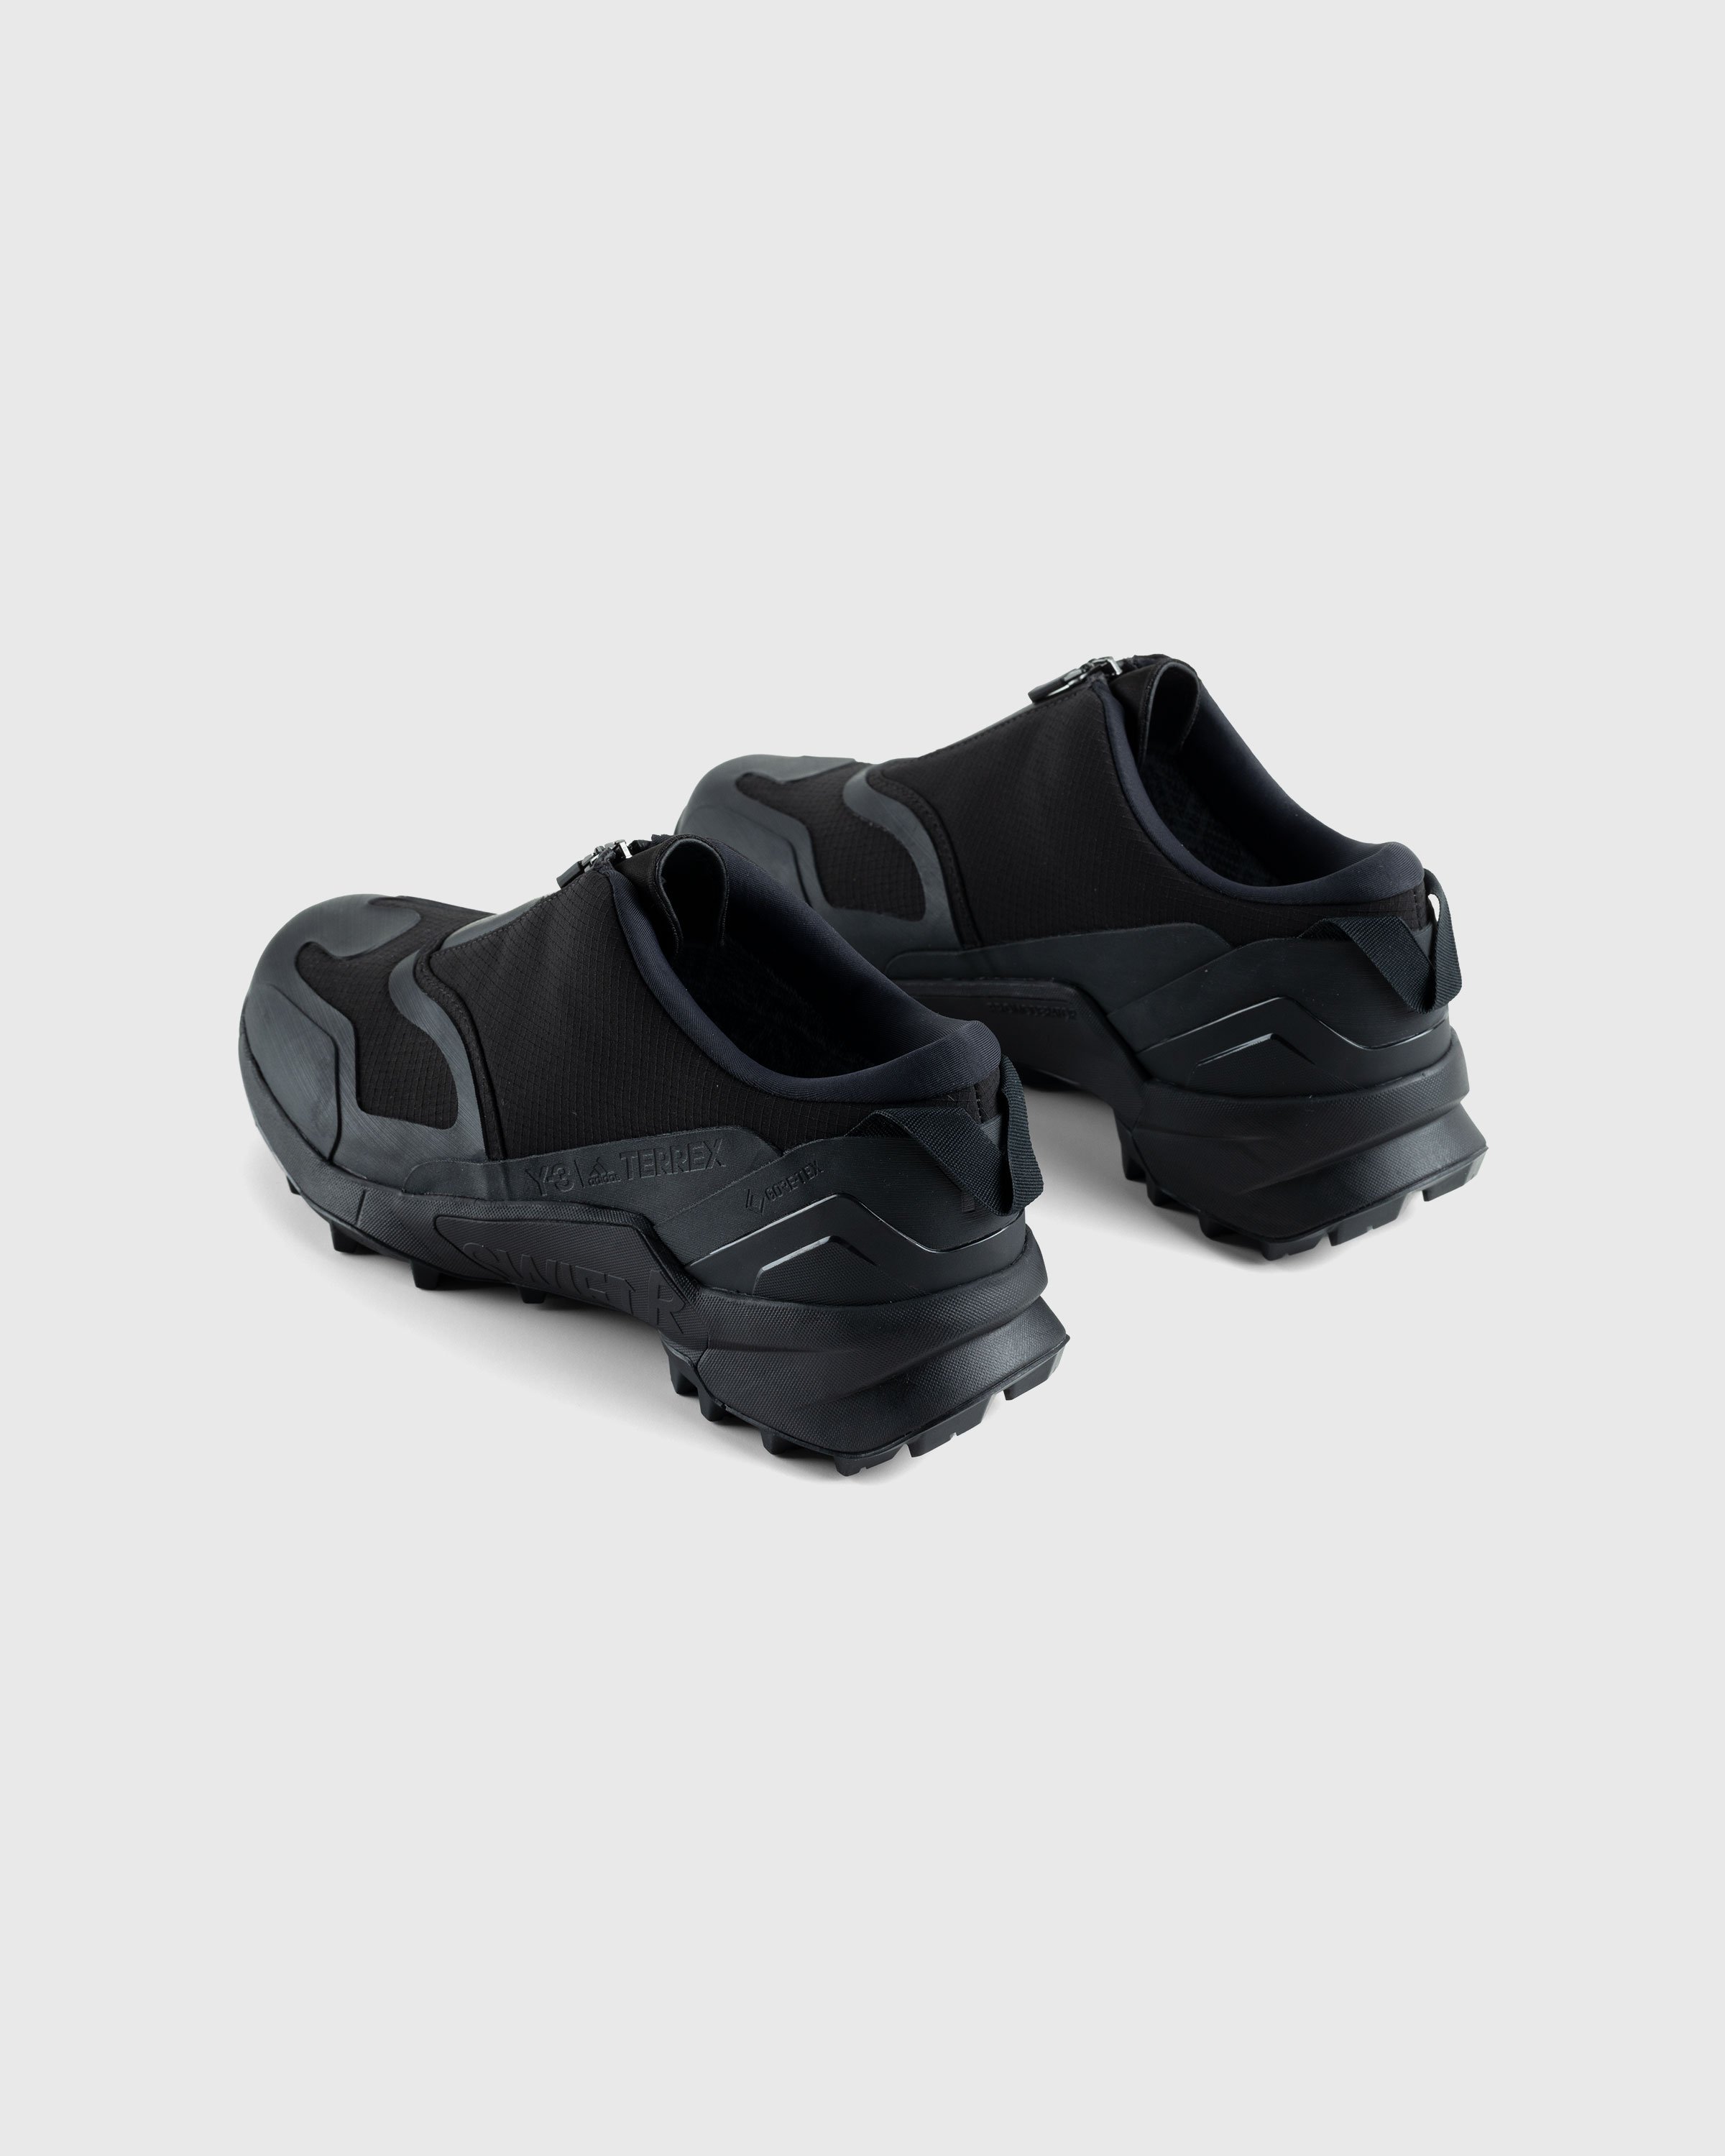 Y-3 - Terrex Swift R3 GORE-TEX - Footwear - Black - Image 4